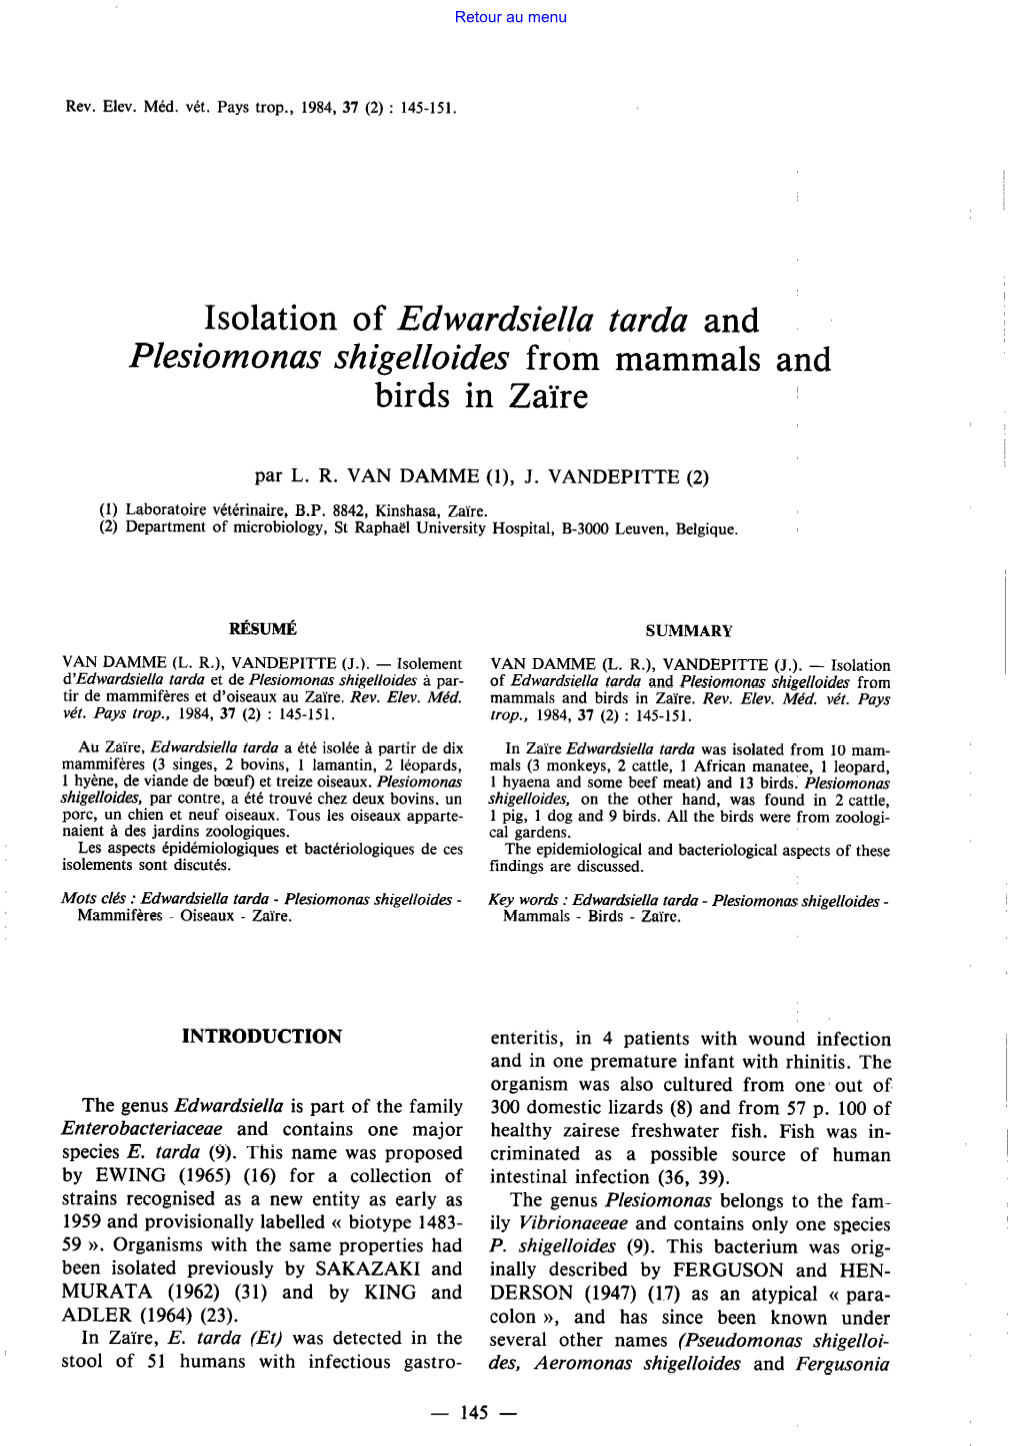 Isolation of Edwardsiella Tarda and Plesiomonas Shigelloides from Mammals and Birds in Zaïre